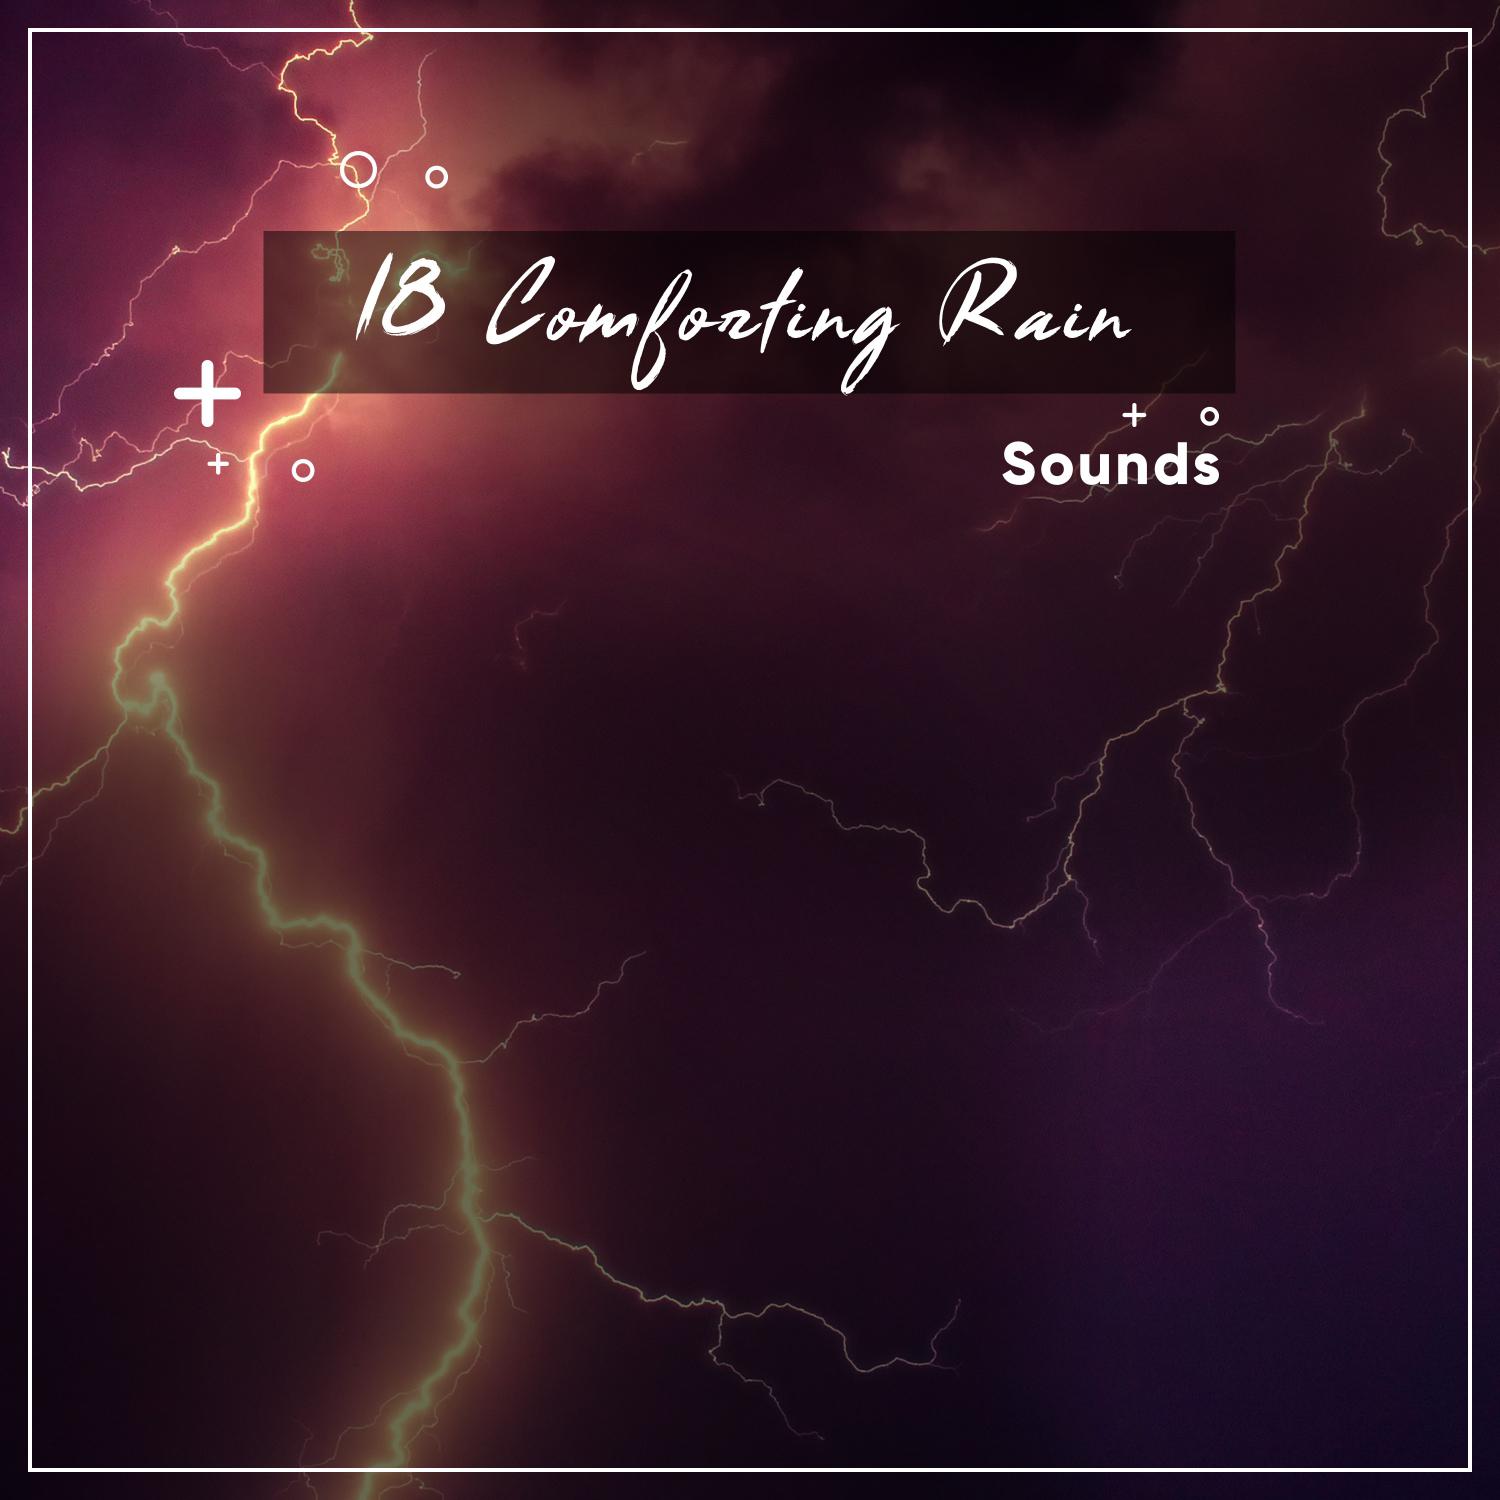 18 Comforting Rain Sounds Ideal Sleeping Companion